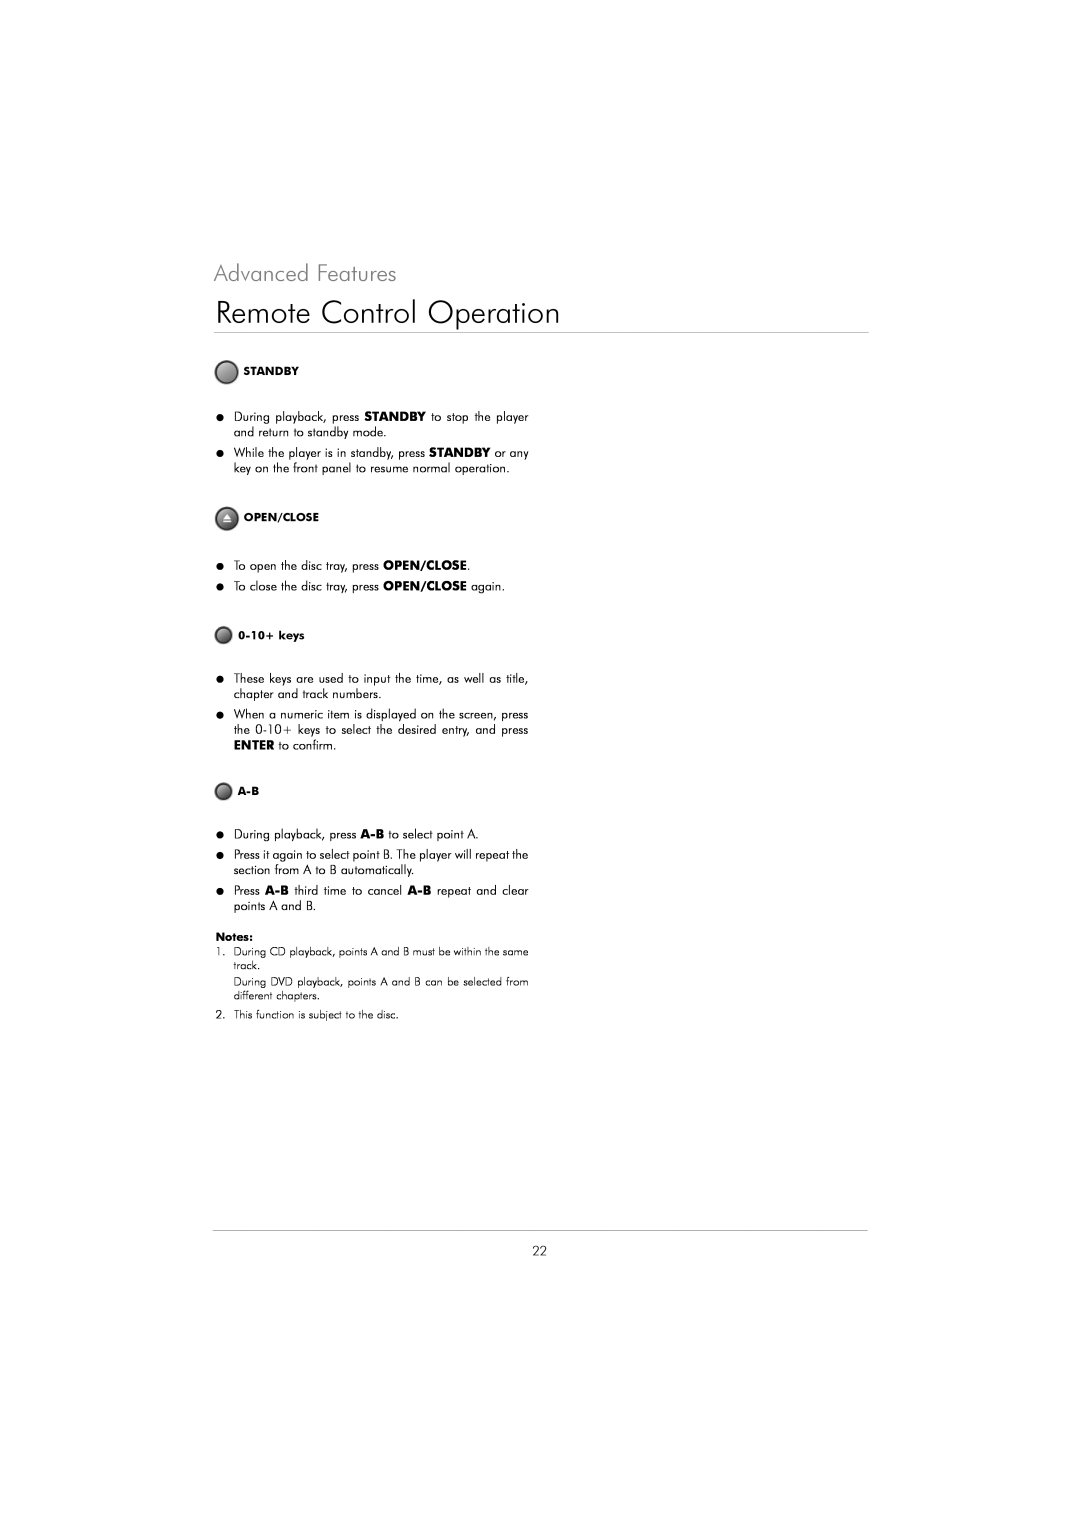 Kodak DVD 40 user manual Remote Control Operation, Advanced Features 